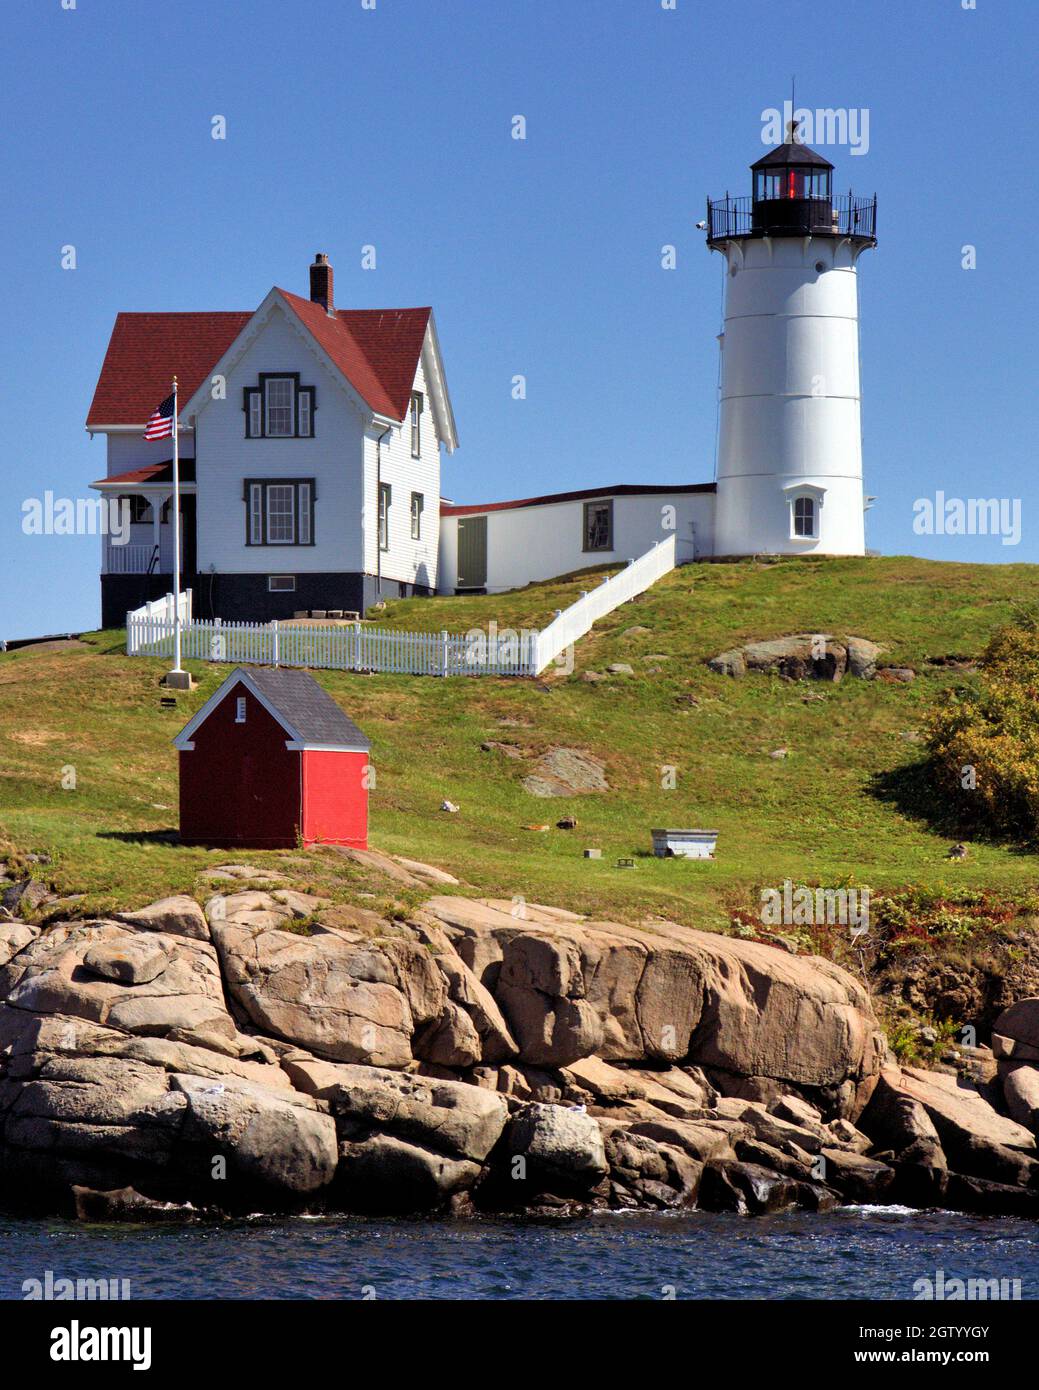 Lighthouse Amidst Rocks And Buildings Against Sky Stock Photo